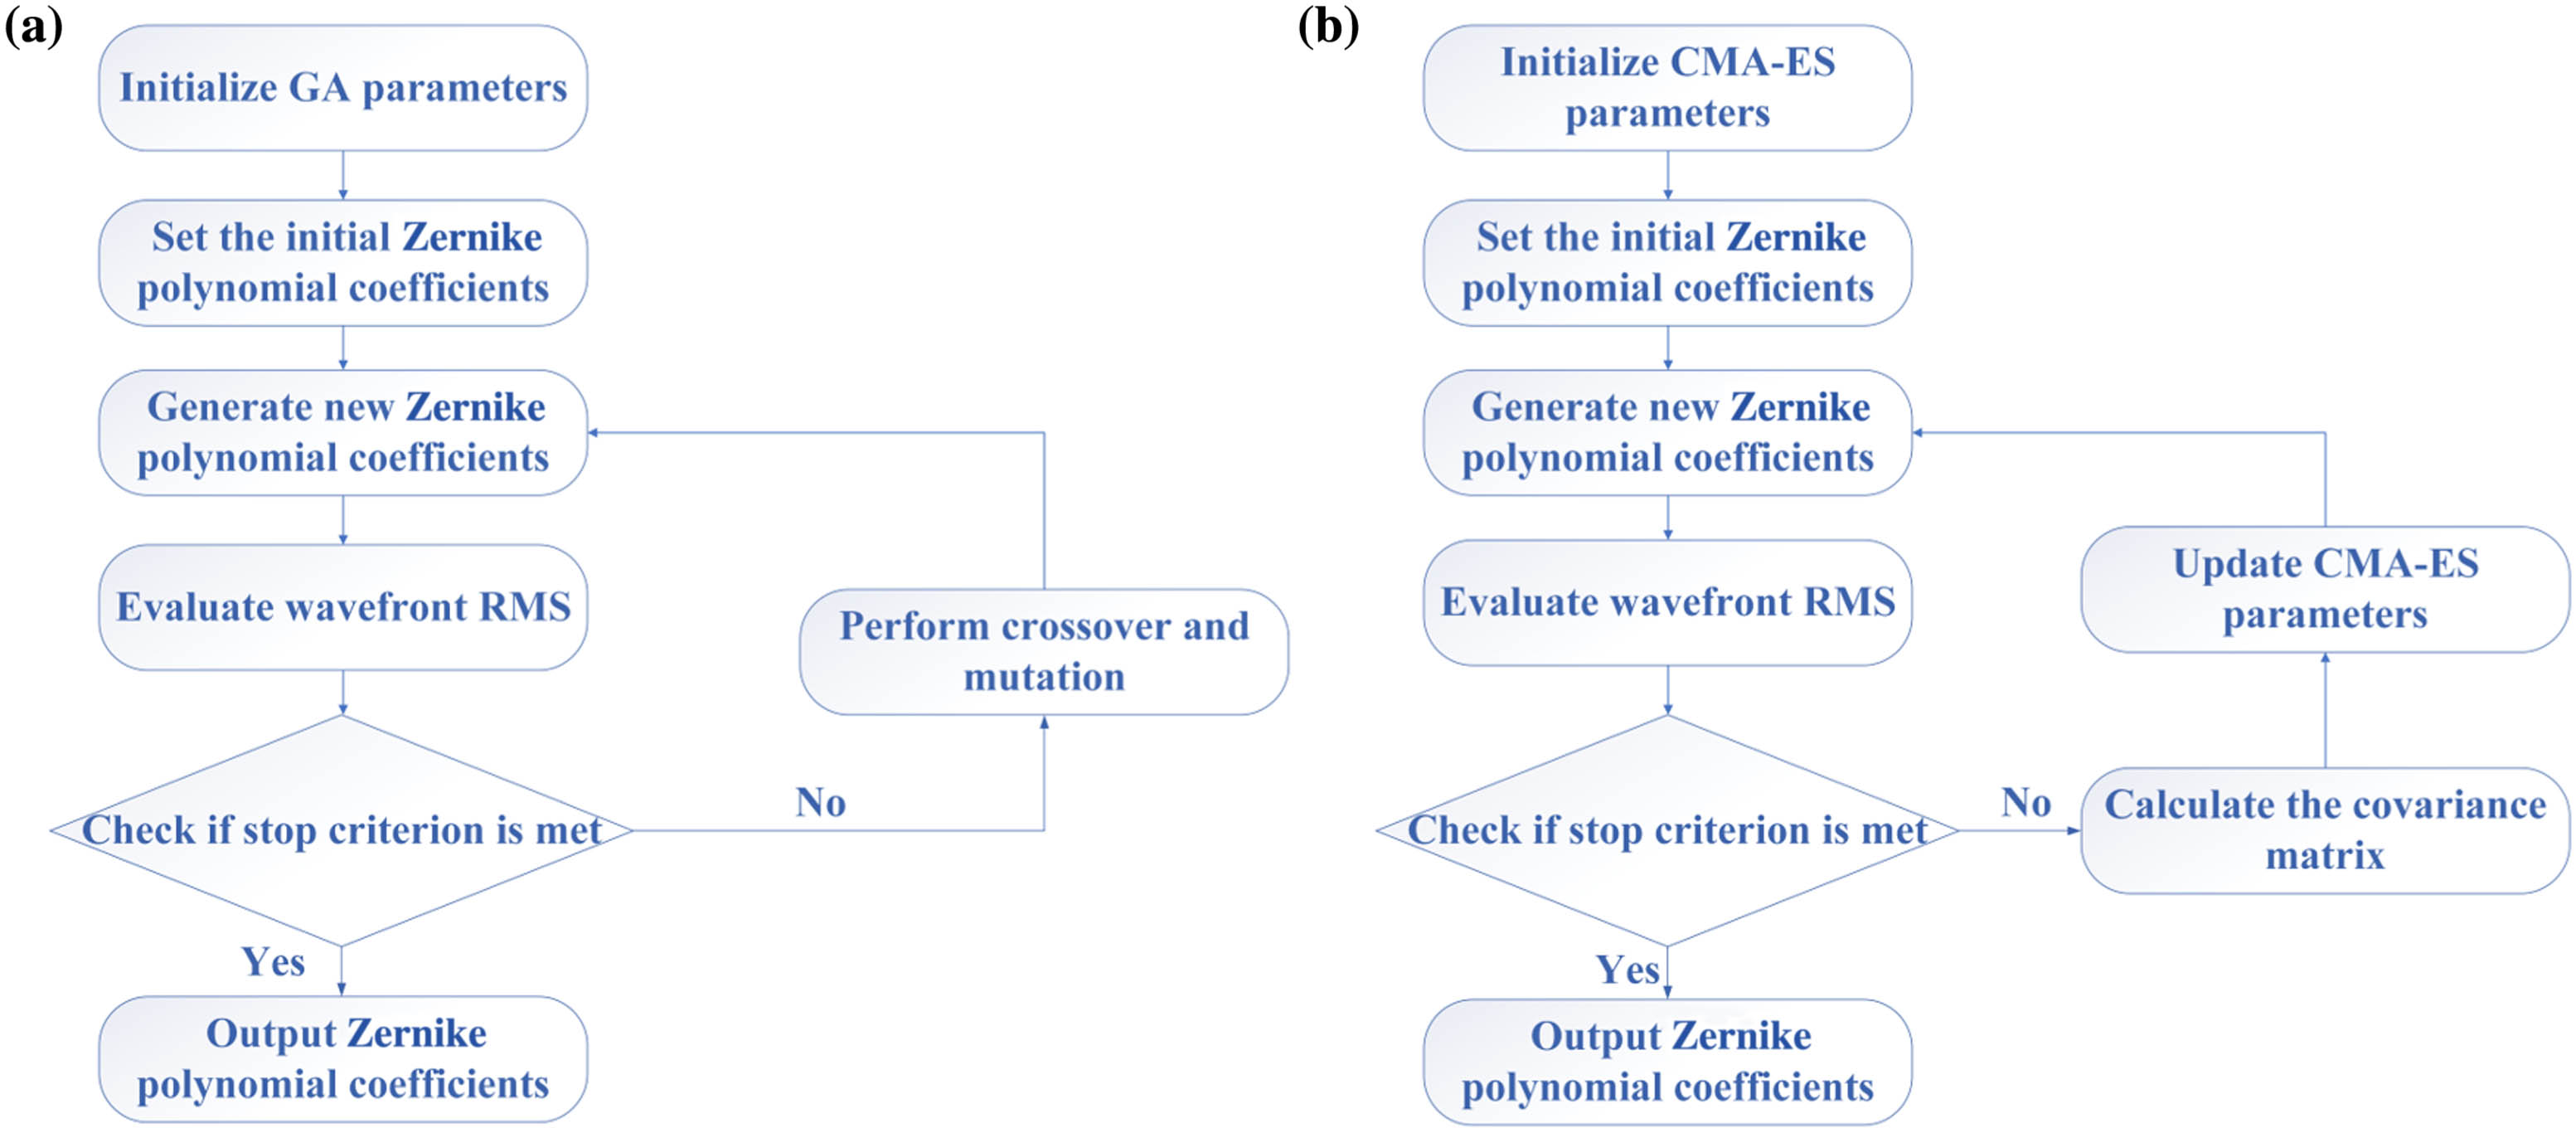 Simulation process schematic. (a) The GA process schematic, and (b) the CMA-ES process schematic.